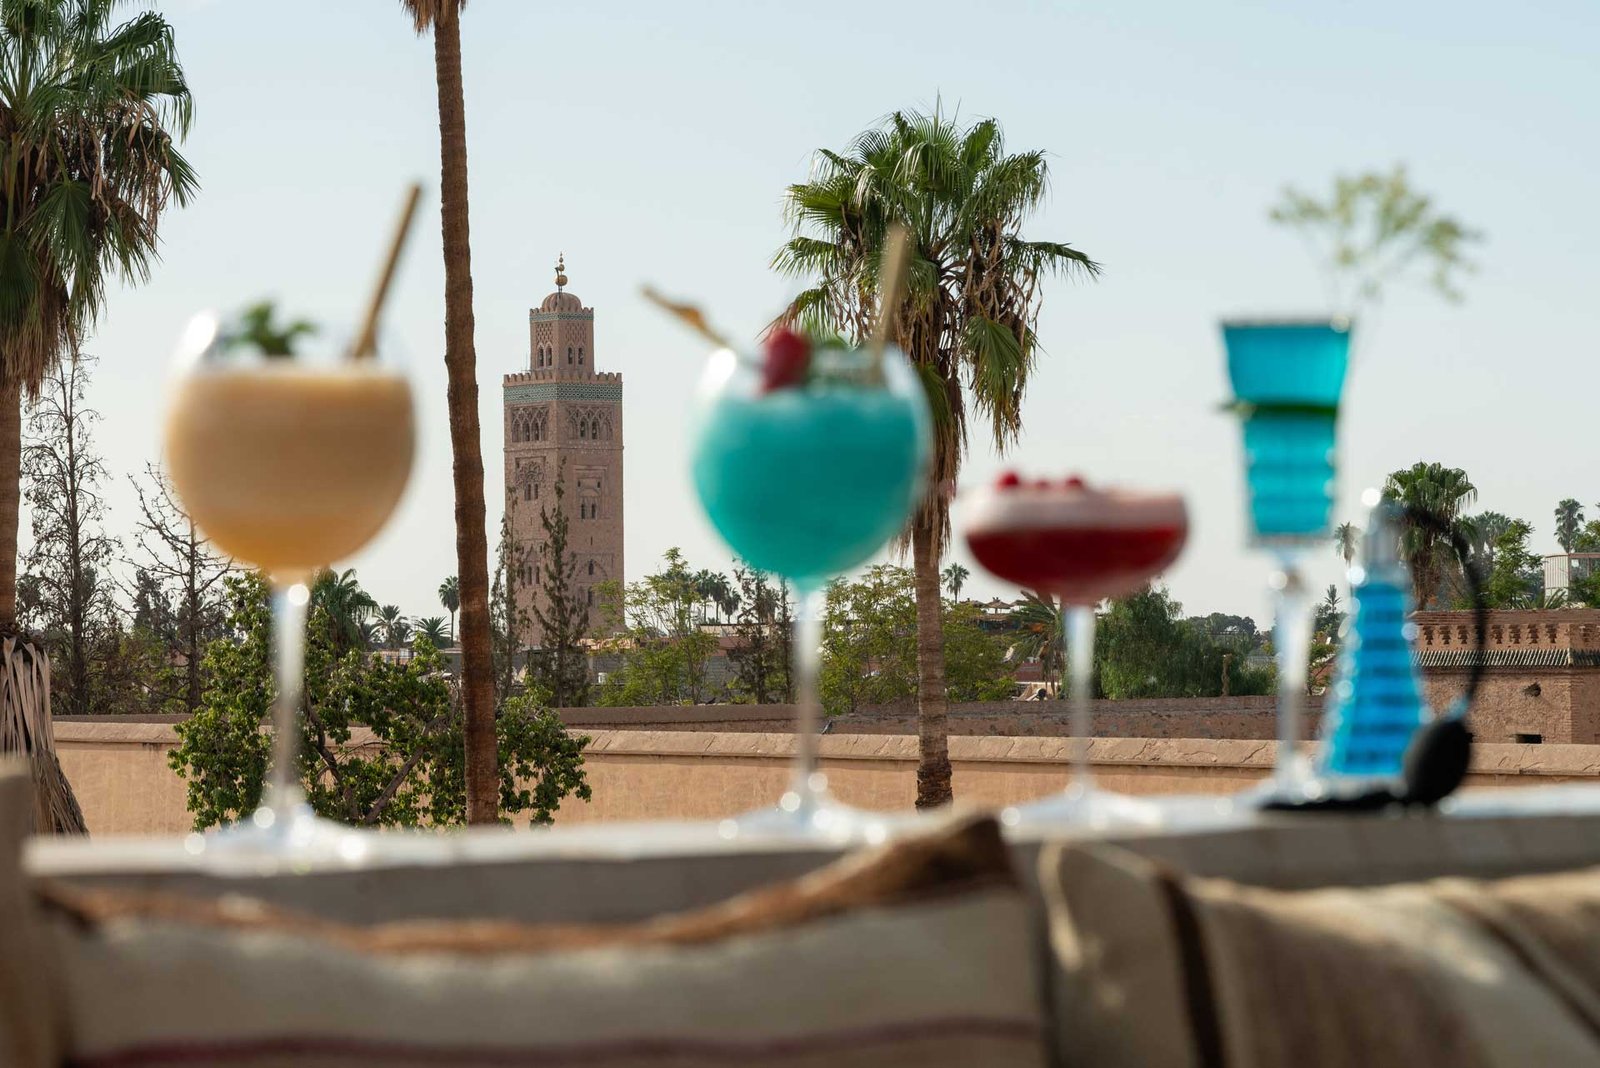 Restaurant in Marrakech view around Medina & Koutoubia Mosque